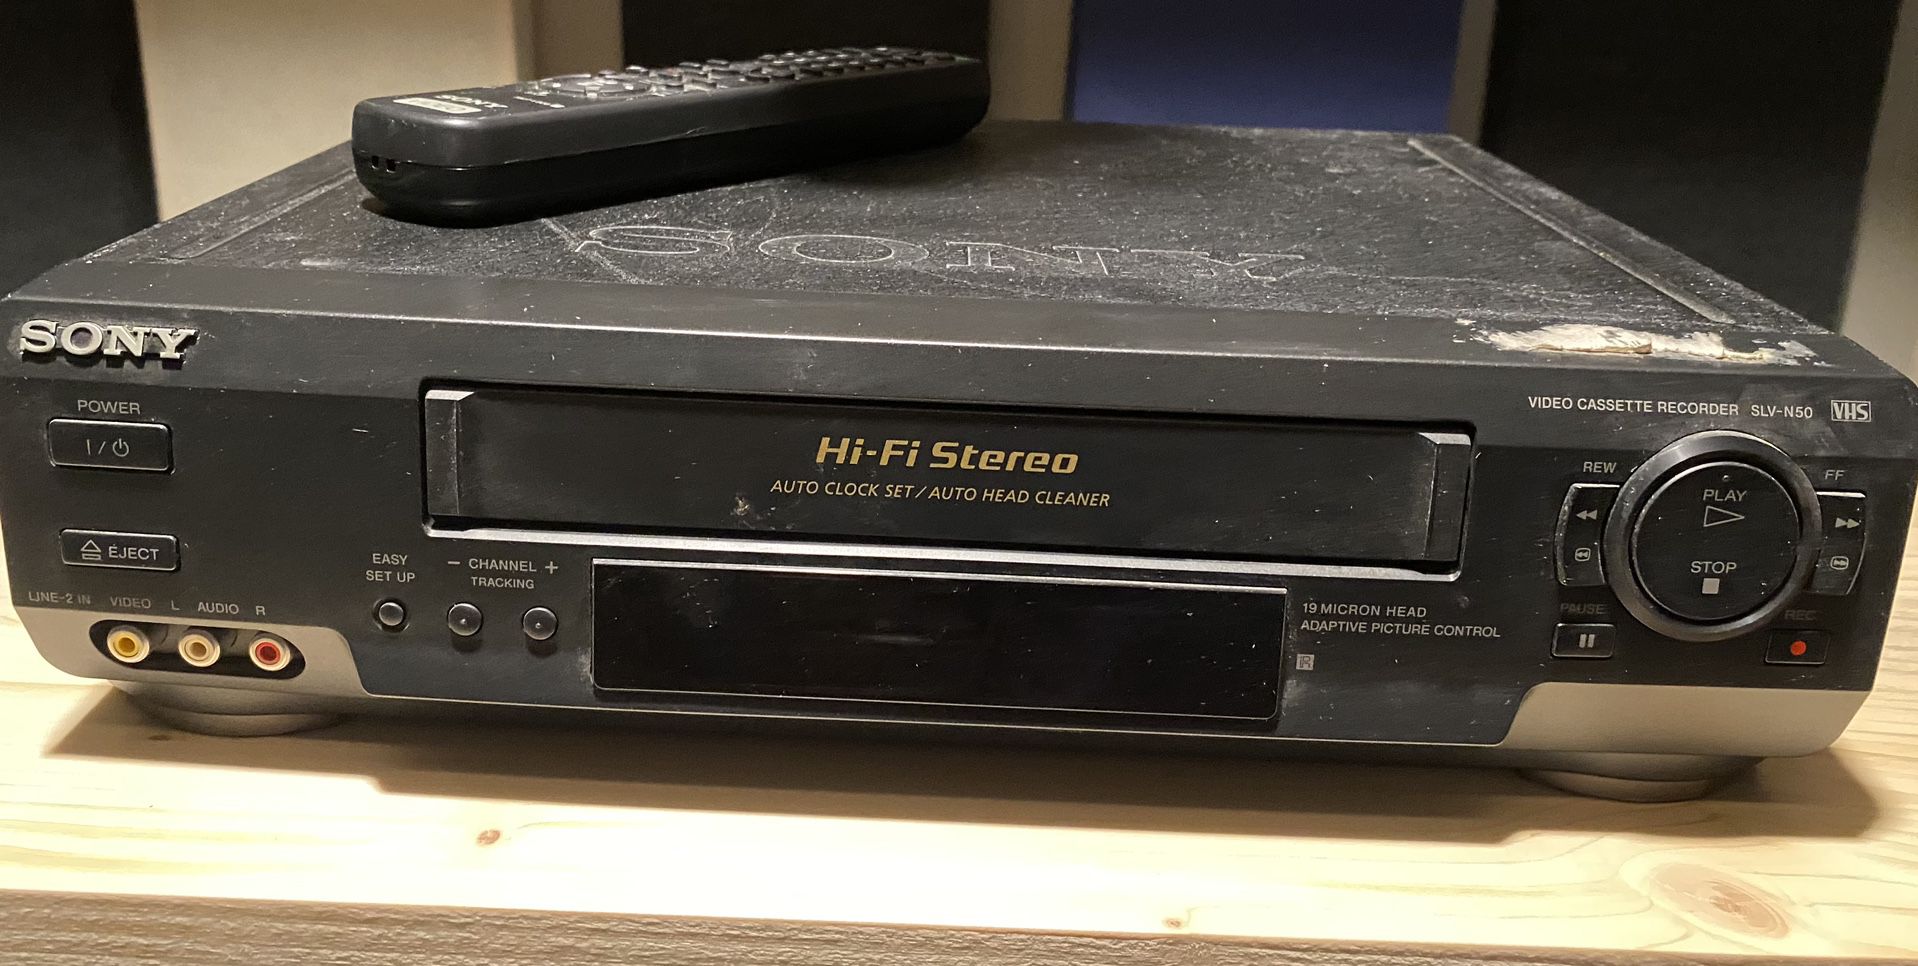 Sony SLV-N50 HiFi VCR player